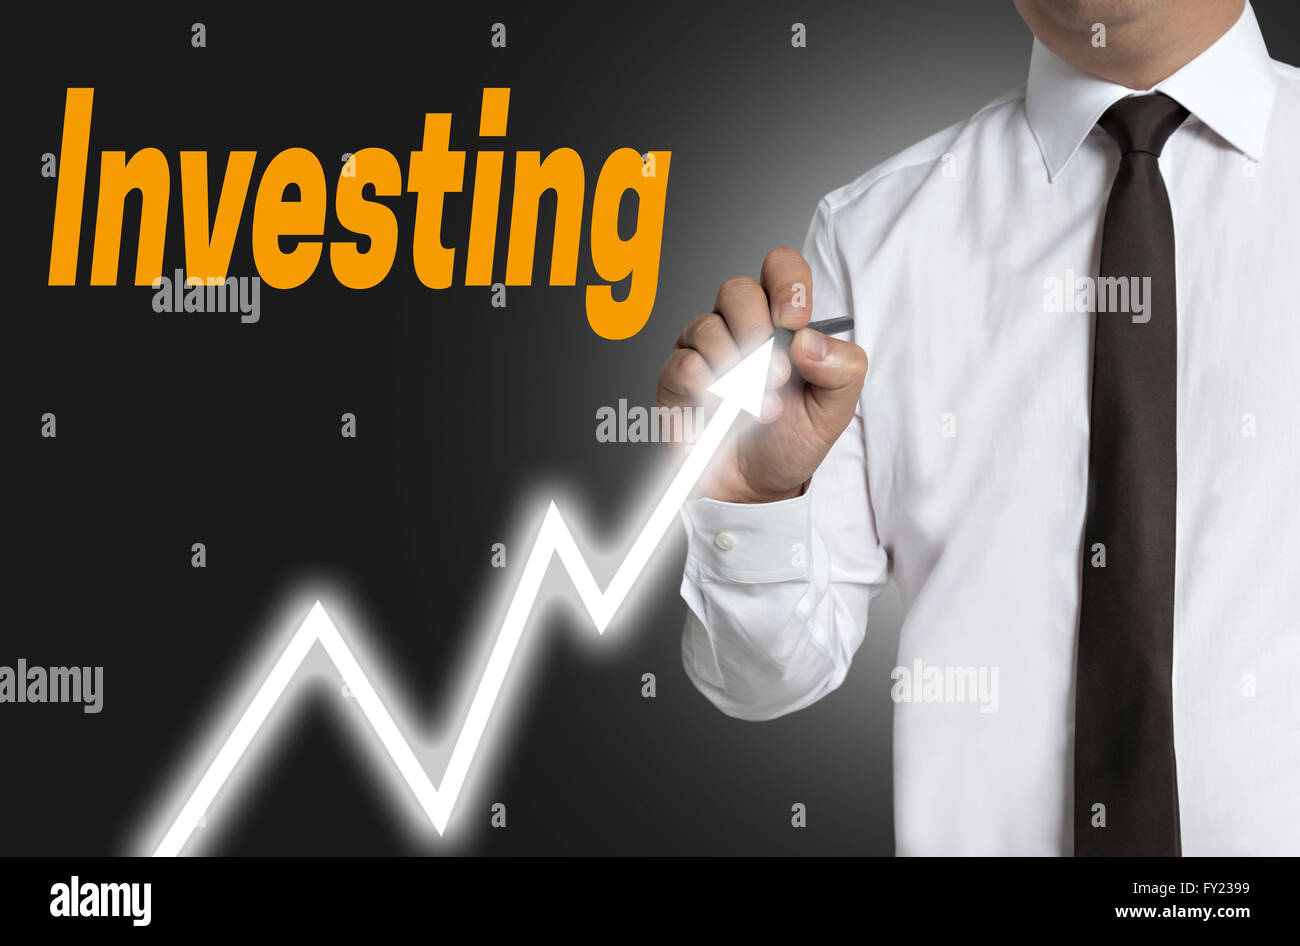 investing trader draws market price on touchscreen. Stock Photo